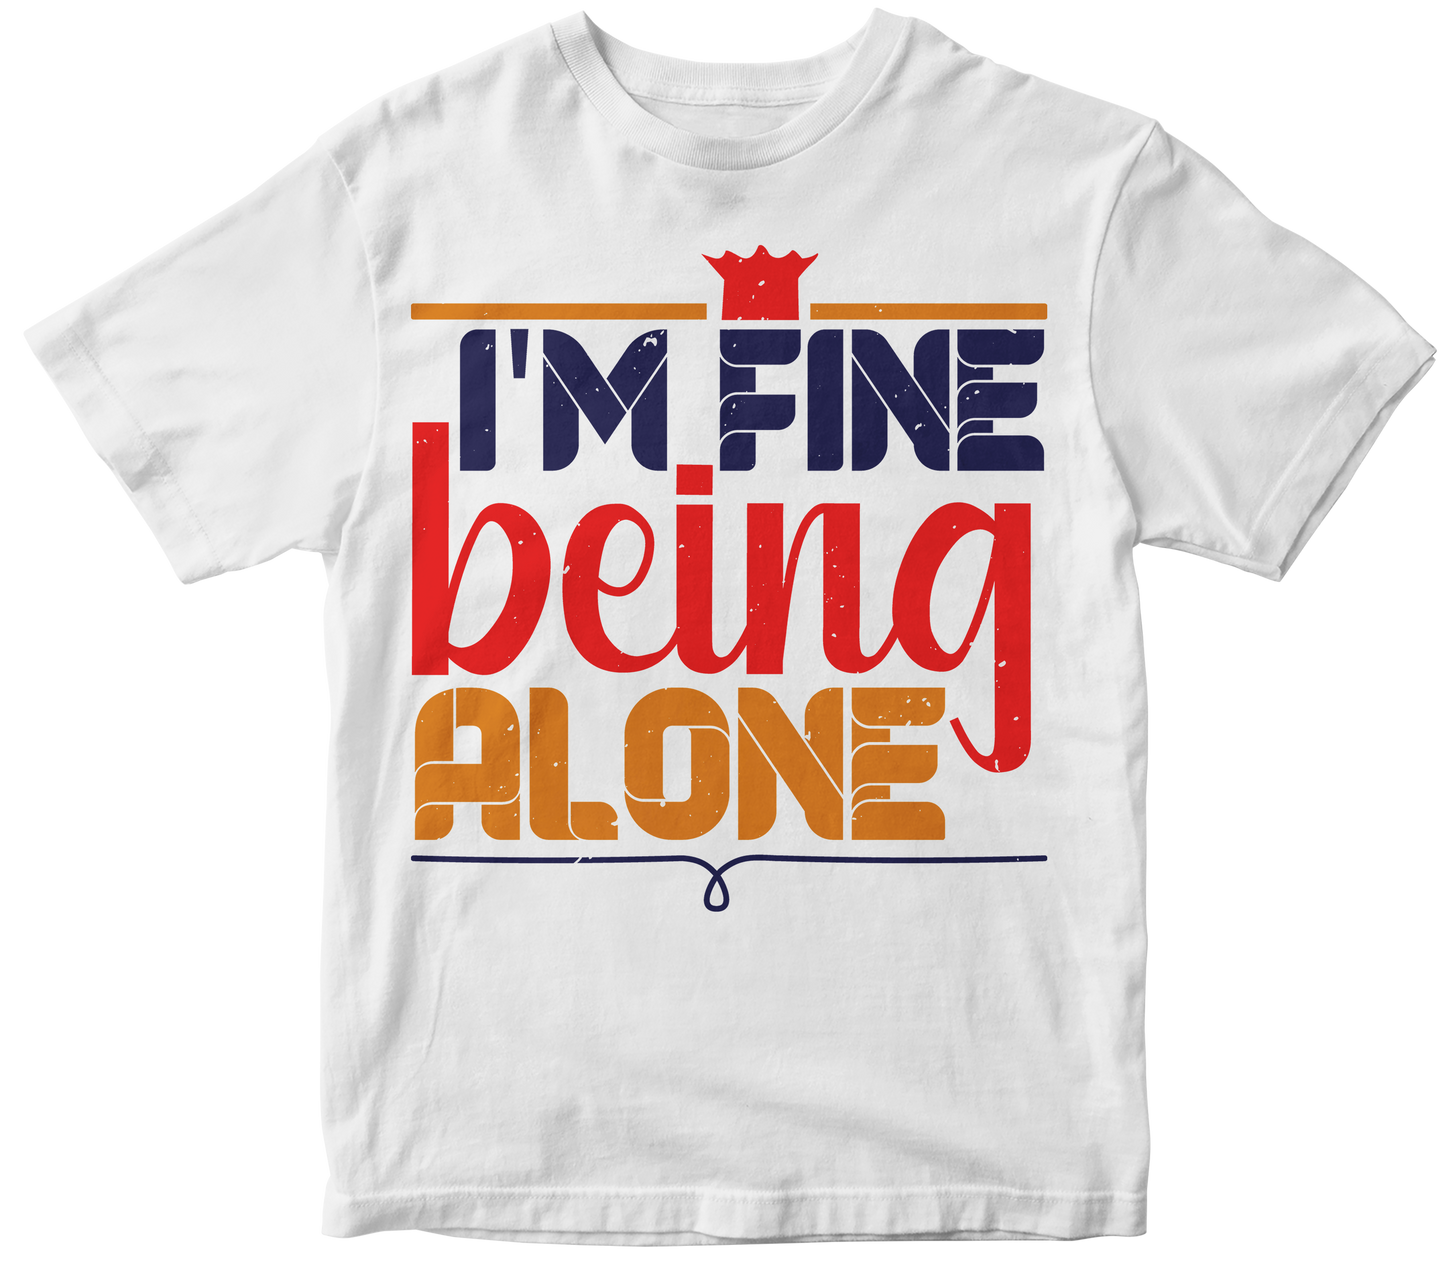 I'm fine being alone